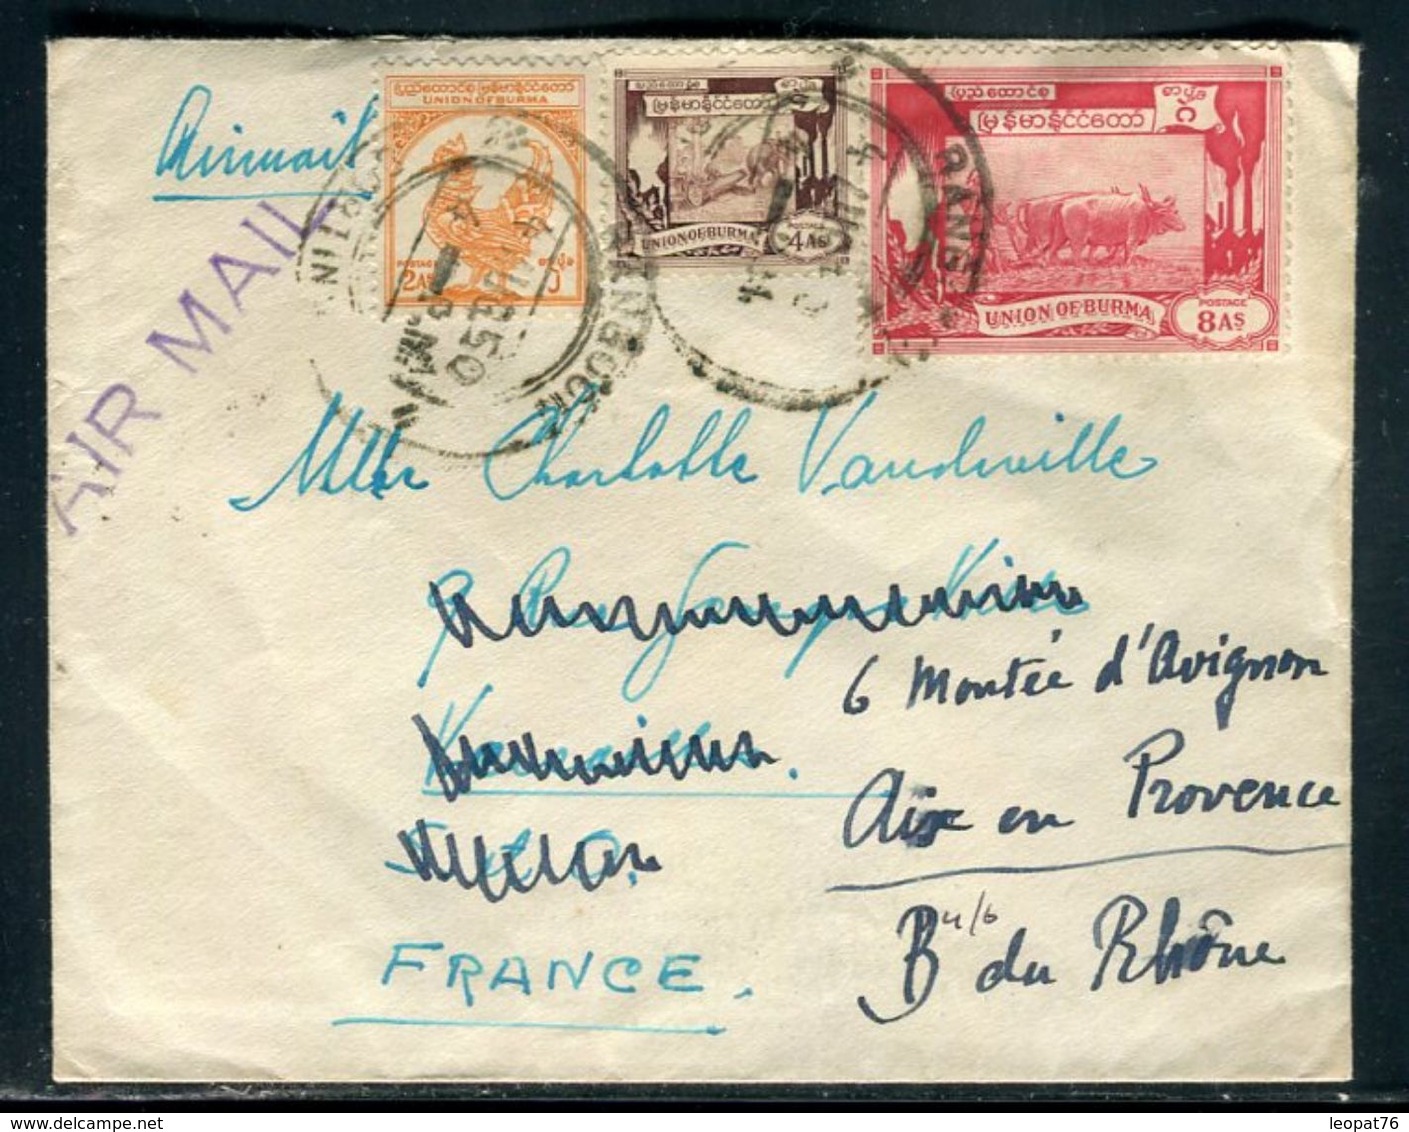 Myanmar / Burma - Enveloppe De Rangoon Pour La France En 1950 , Affranchissement Recto Et Verso - Ref F115 - Myanmar (Birma 1948-...)